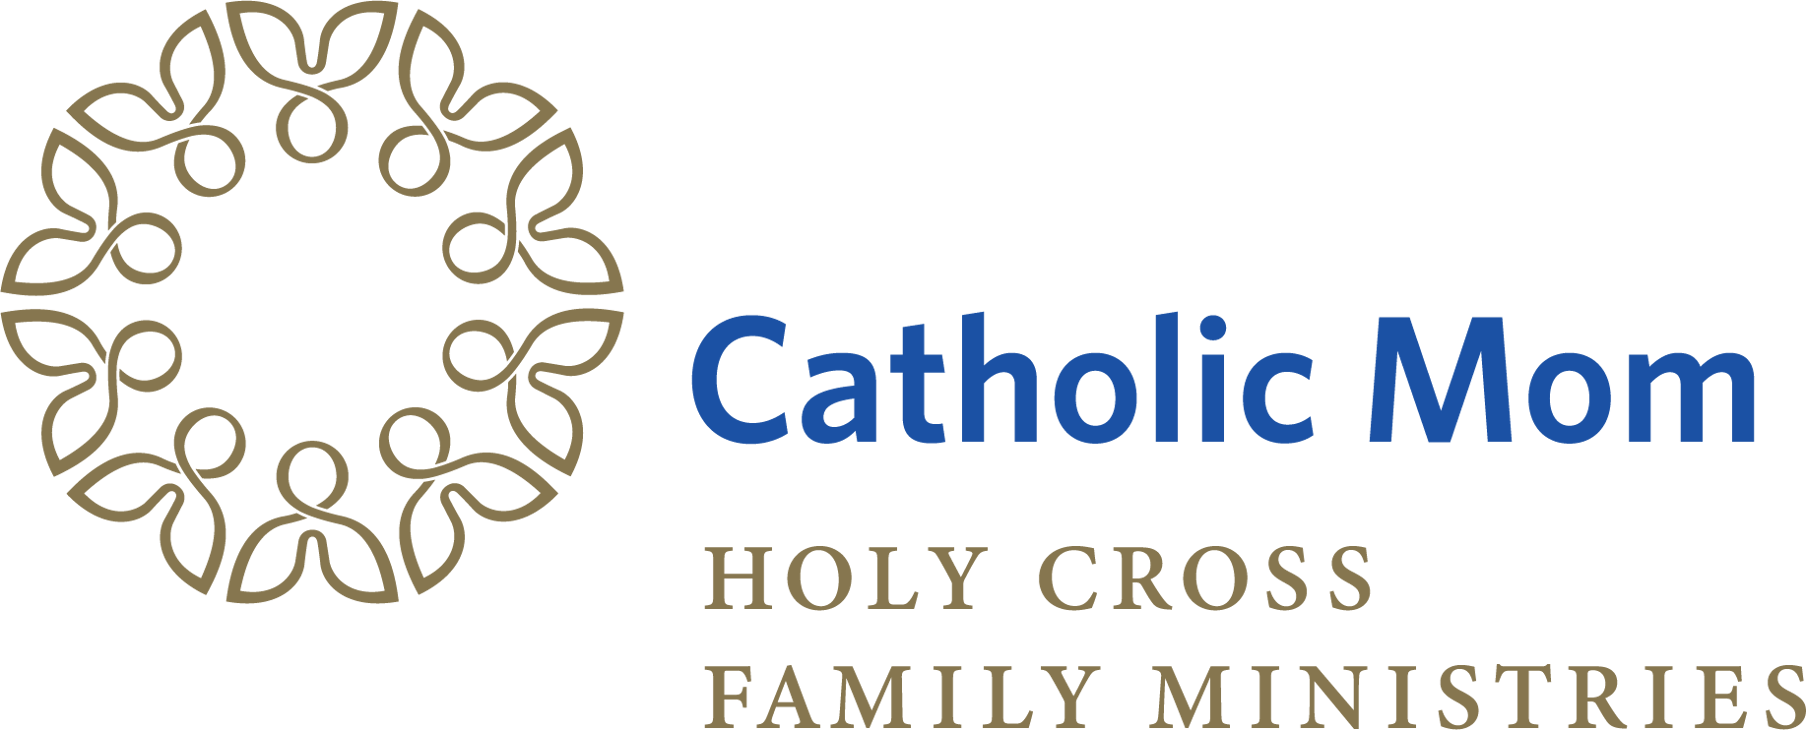 CatholicMom_hcfm_logo1_pos_871c_2728c (002)